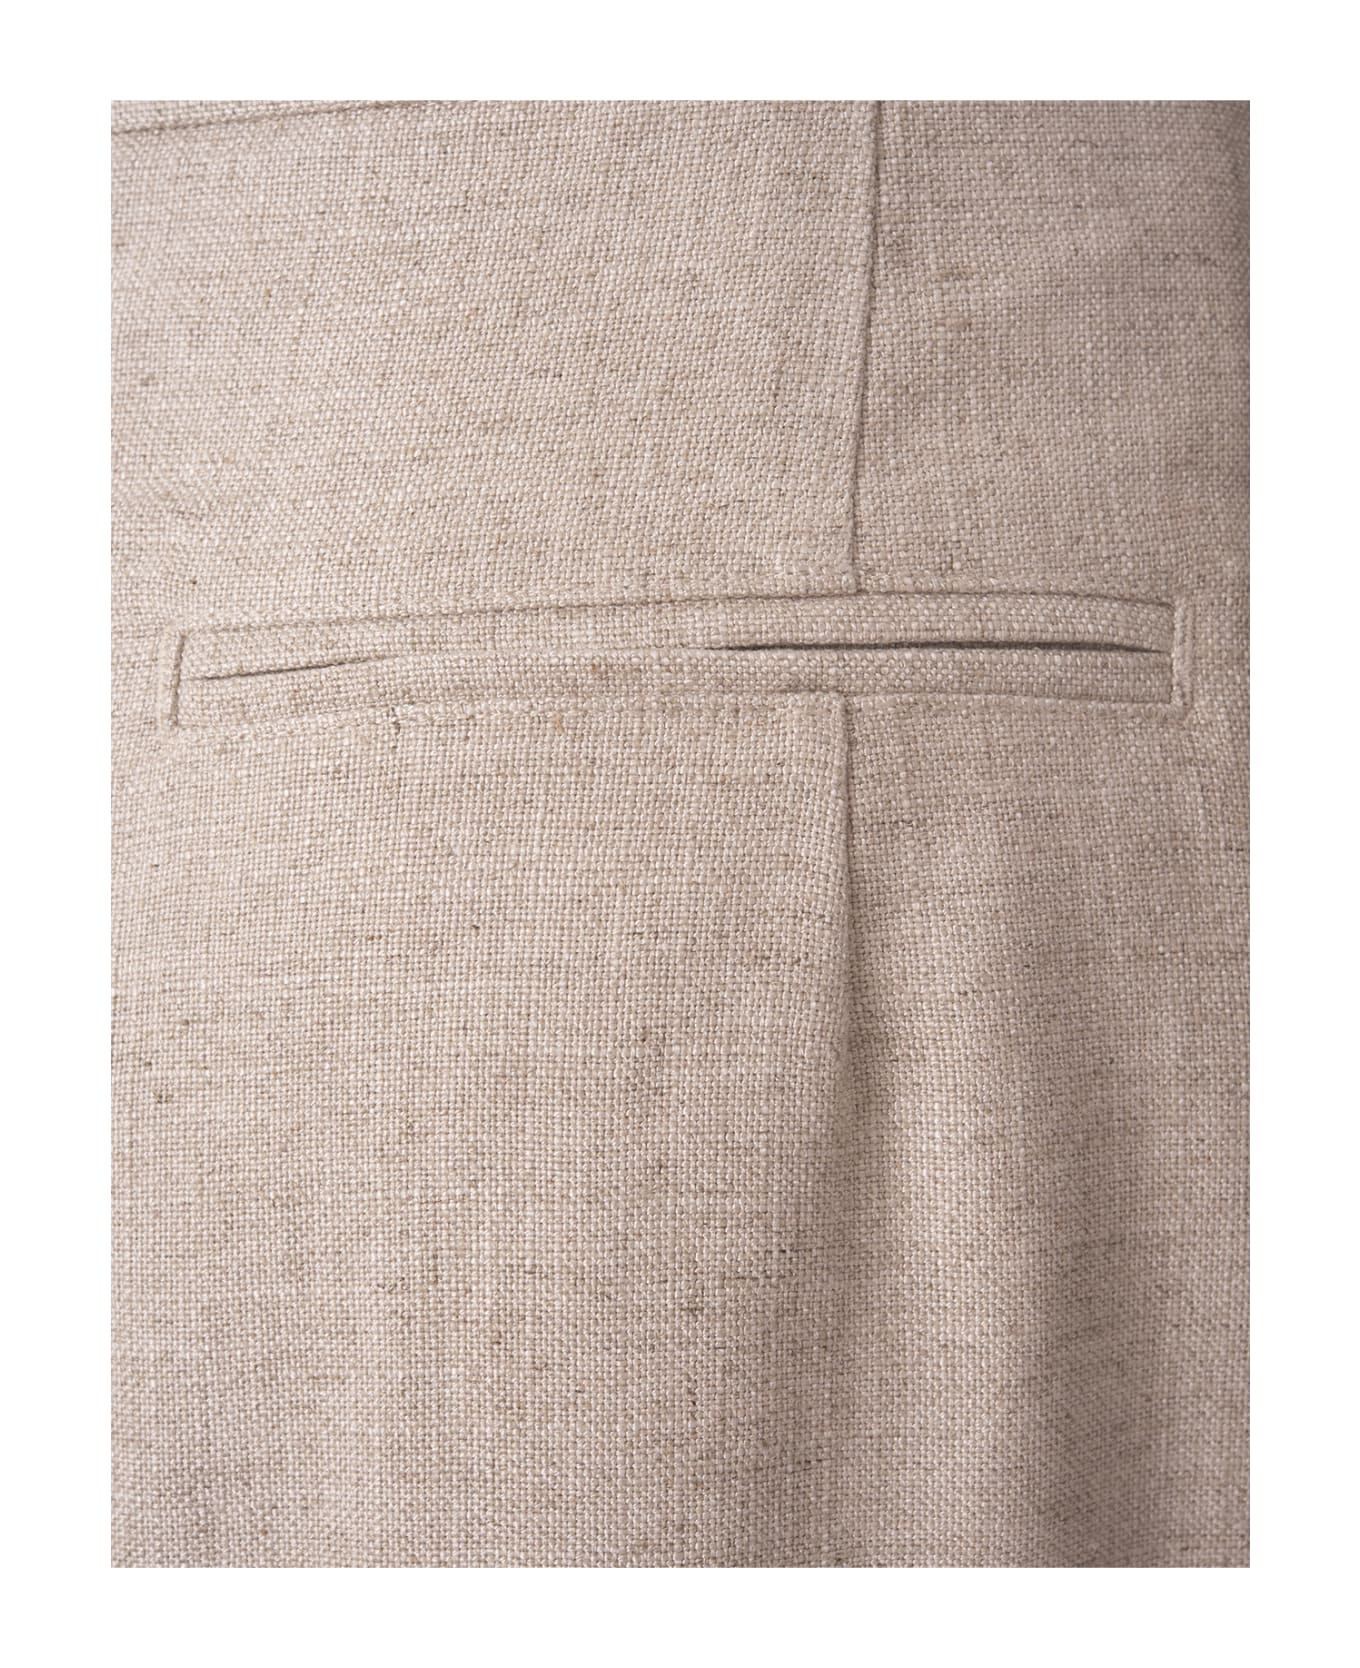 MSGM Sand Mini Skirt With Bead Appliqué - Brown